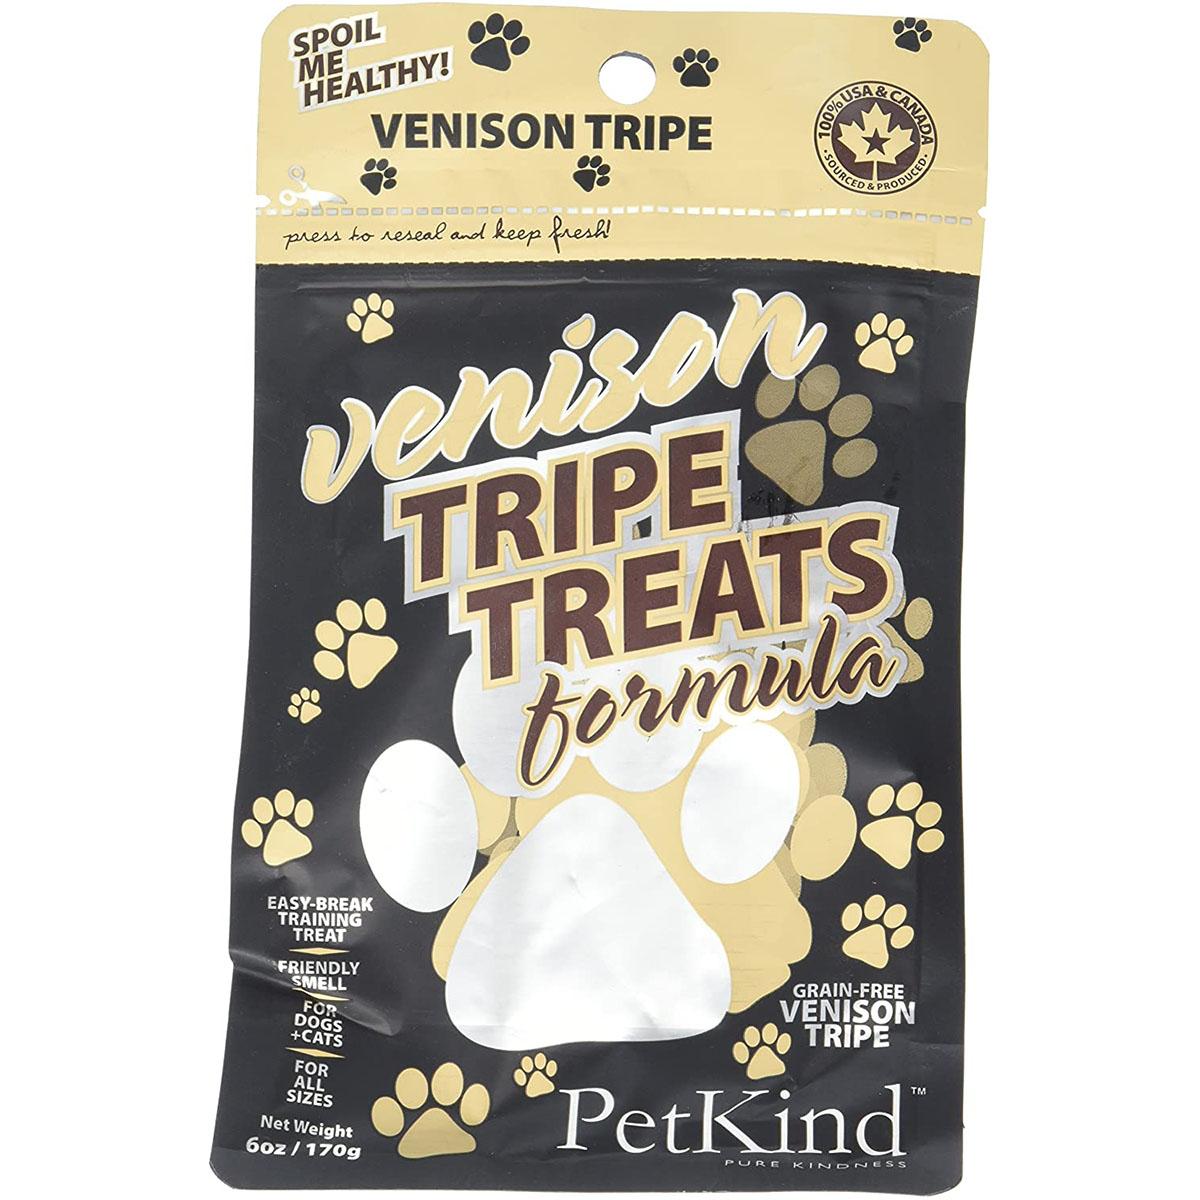 PetKind Grain-Free Venison Tripe Dog and Cat Treats